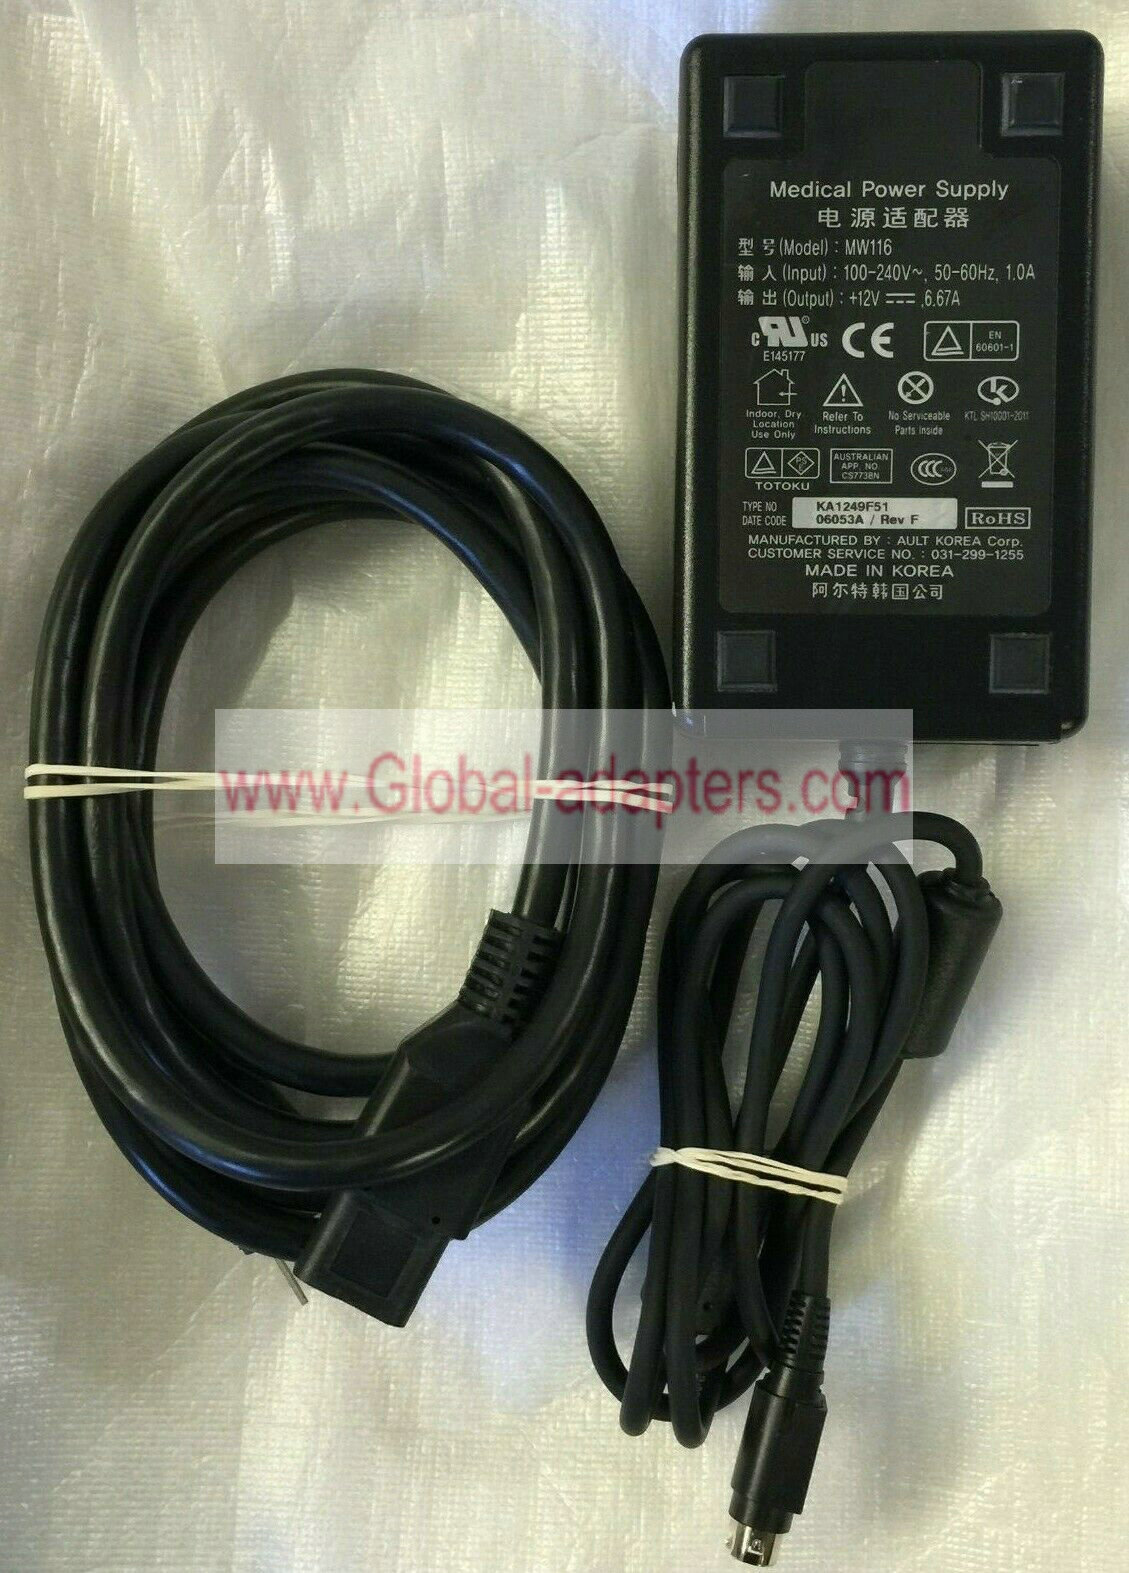 New Totoku/Ault MW116 KA1249F51 Medical Power Supply 12v 6.67a 4 PIN ac adapter - Click Image to Close